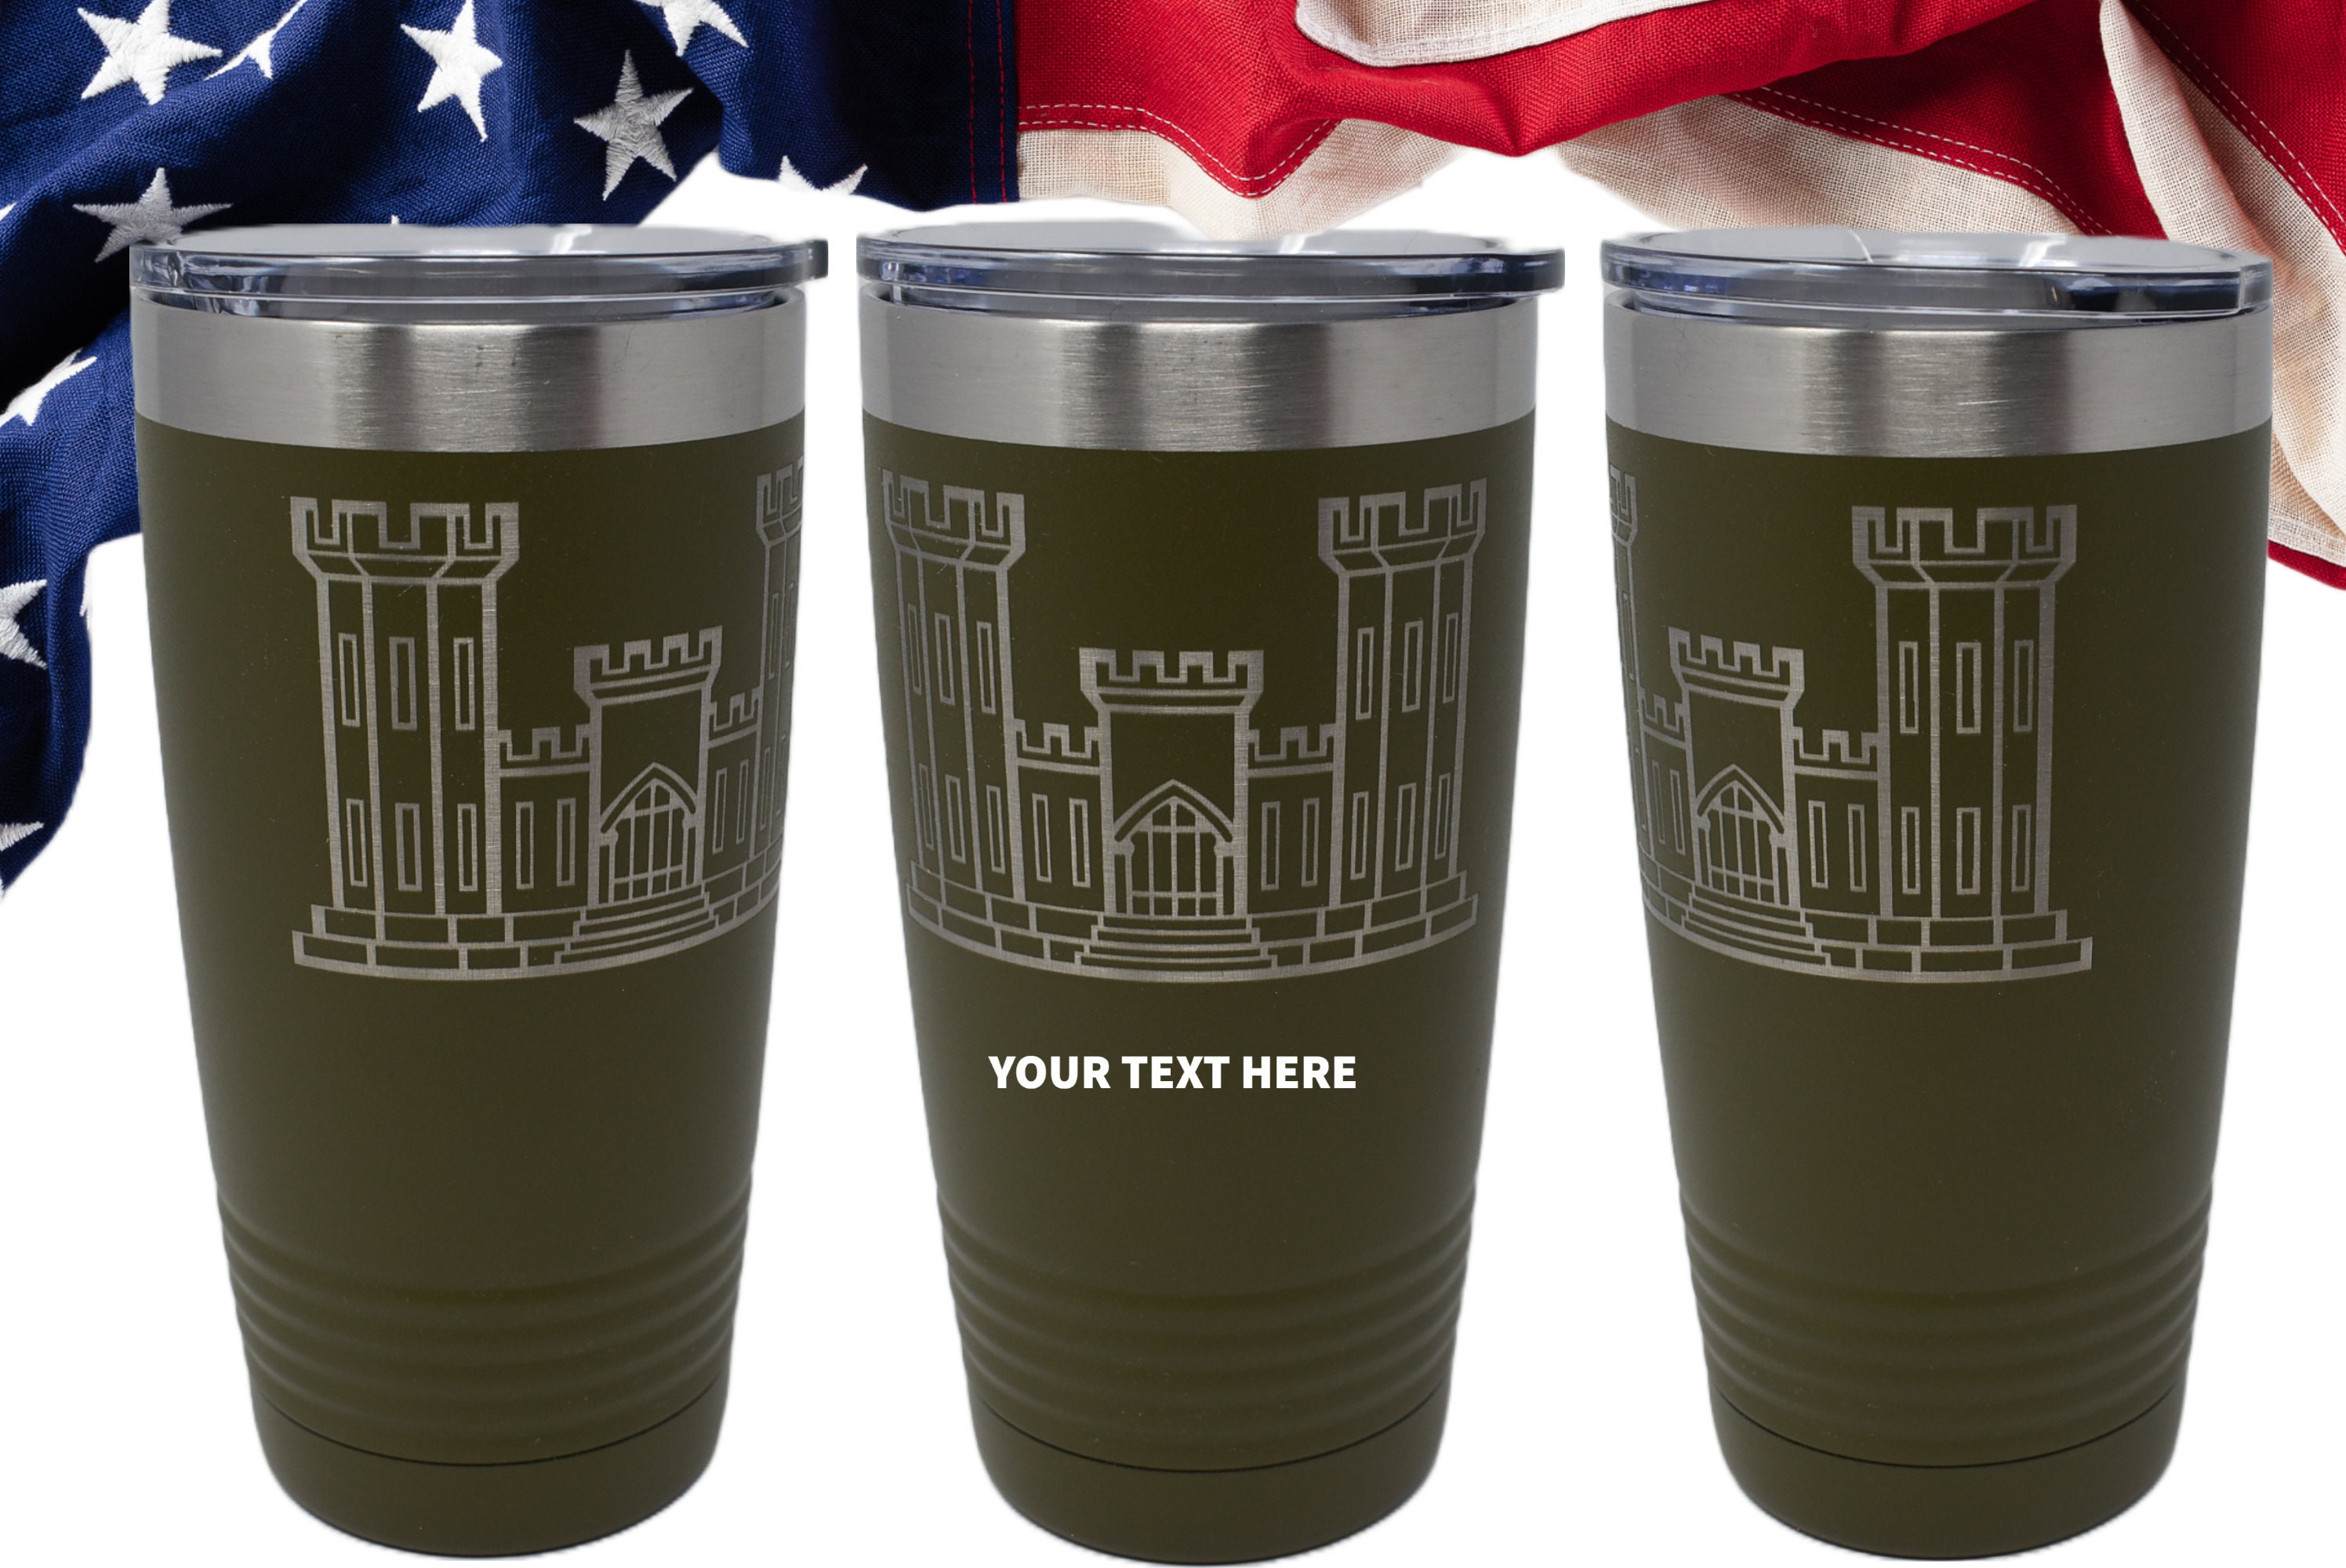 Veterans Day - 20 oz Coffee Tumbler - Crafty Jan's, LLC